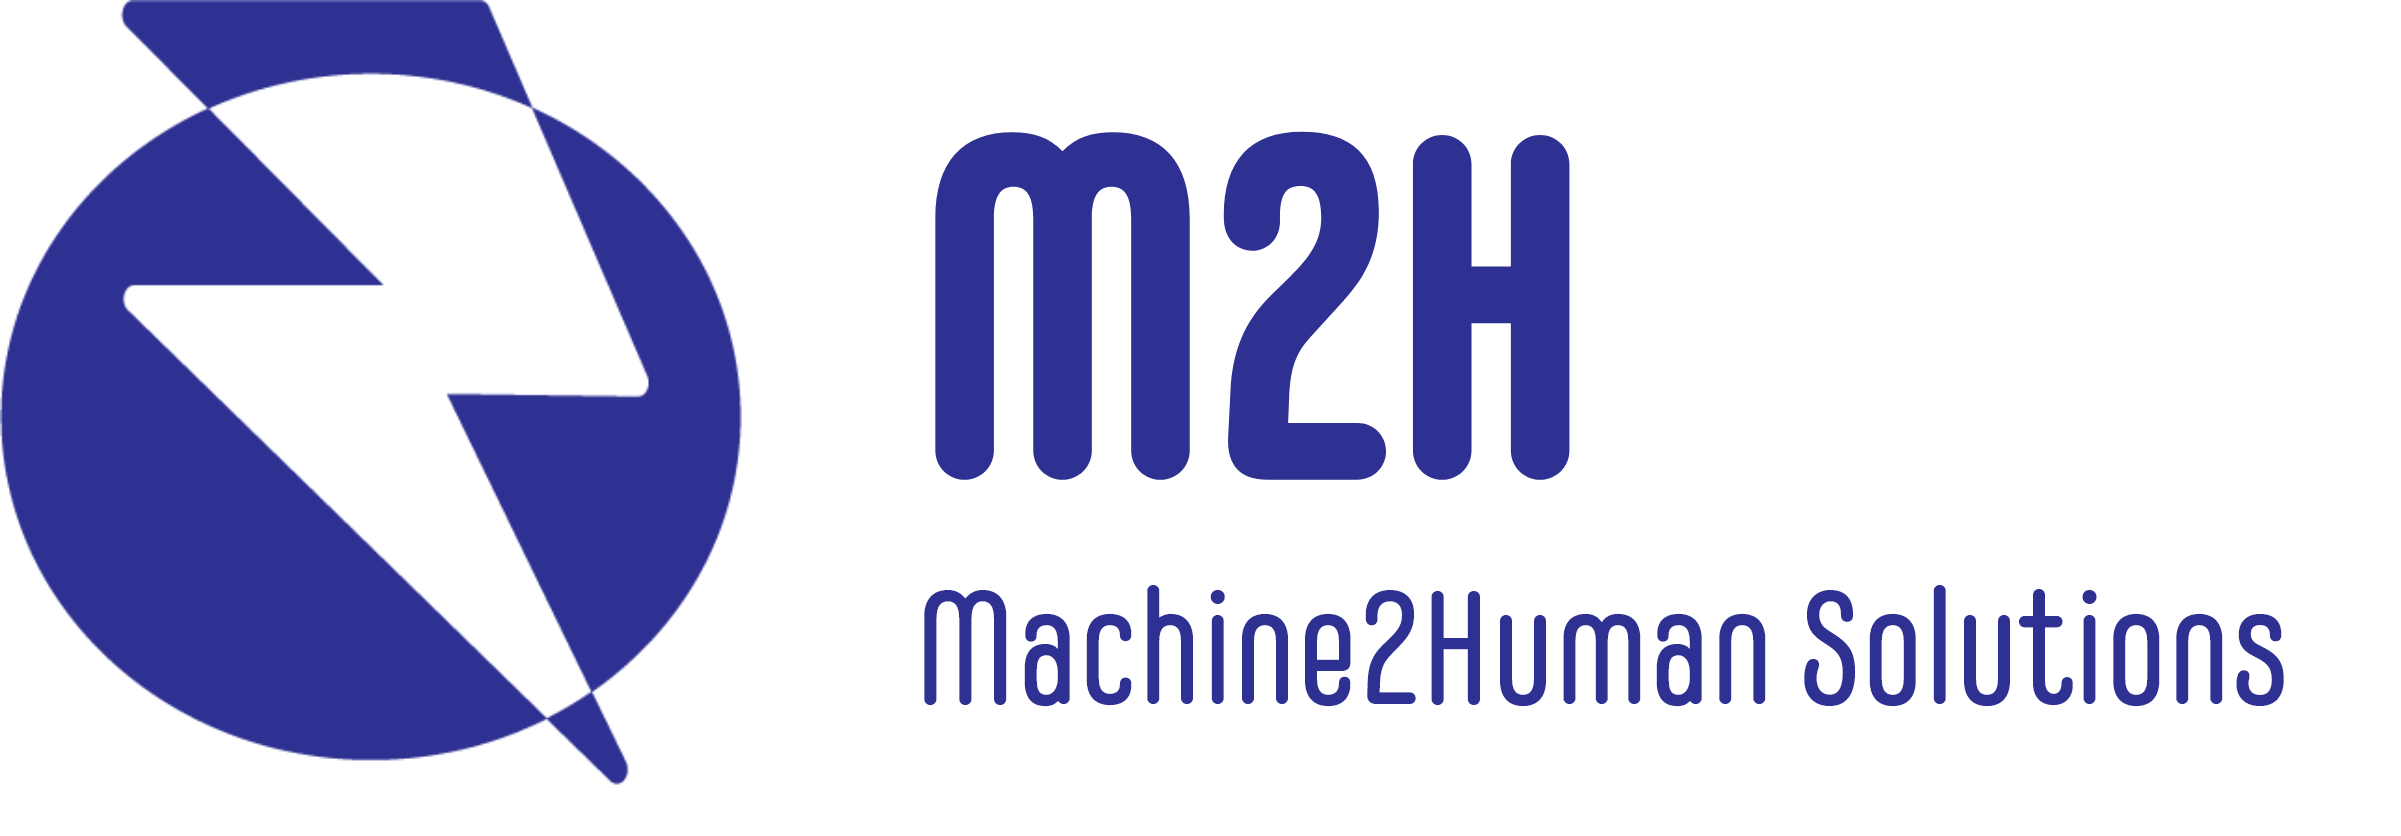 Machine2Human Solutions / startup from Minden / Background